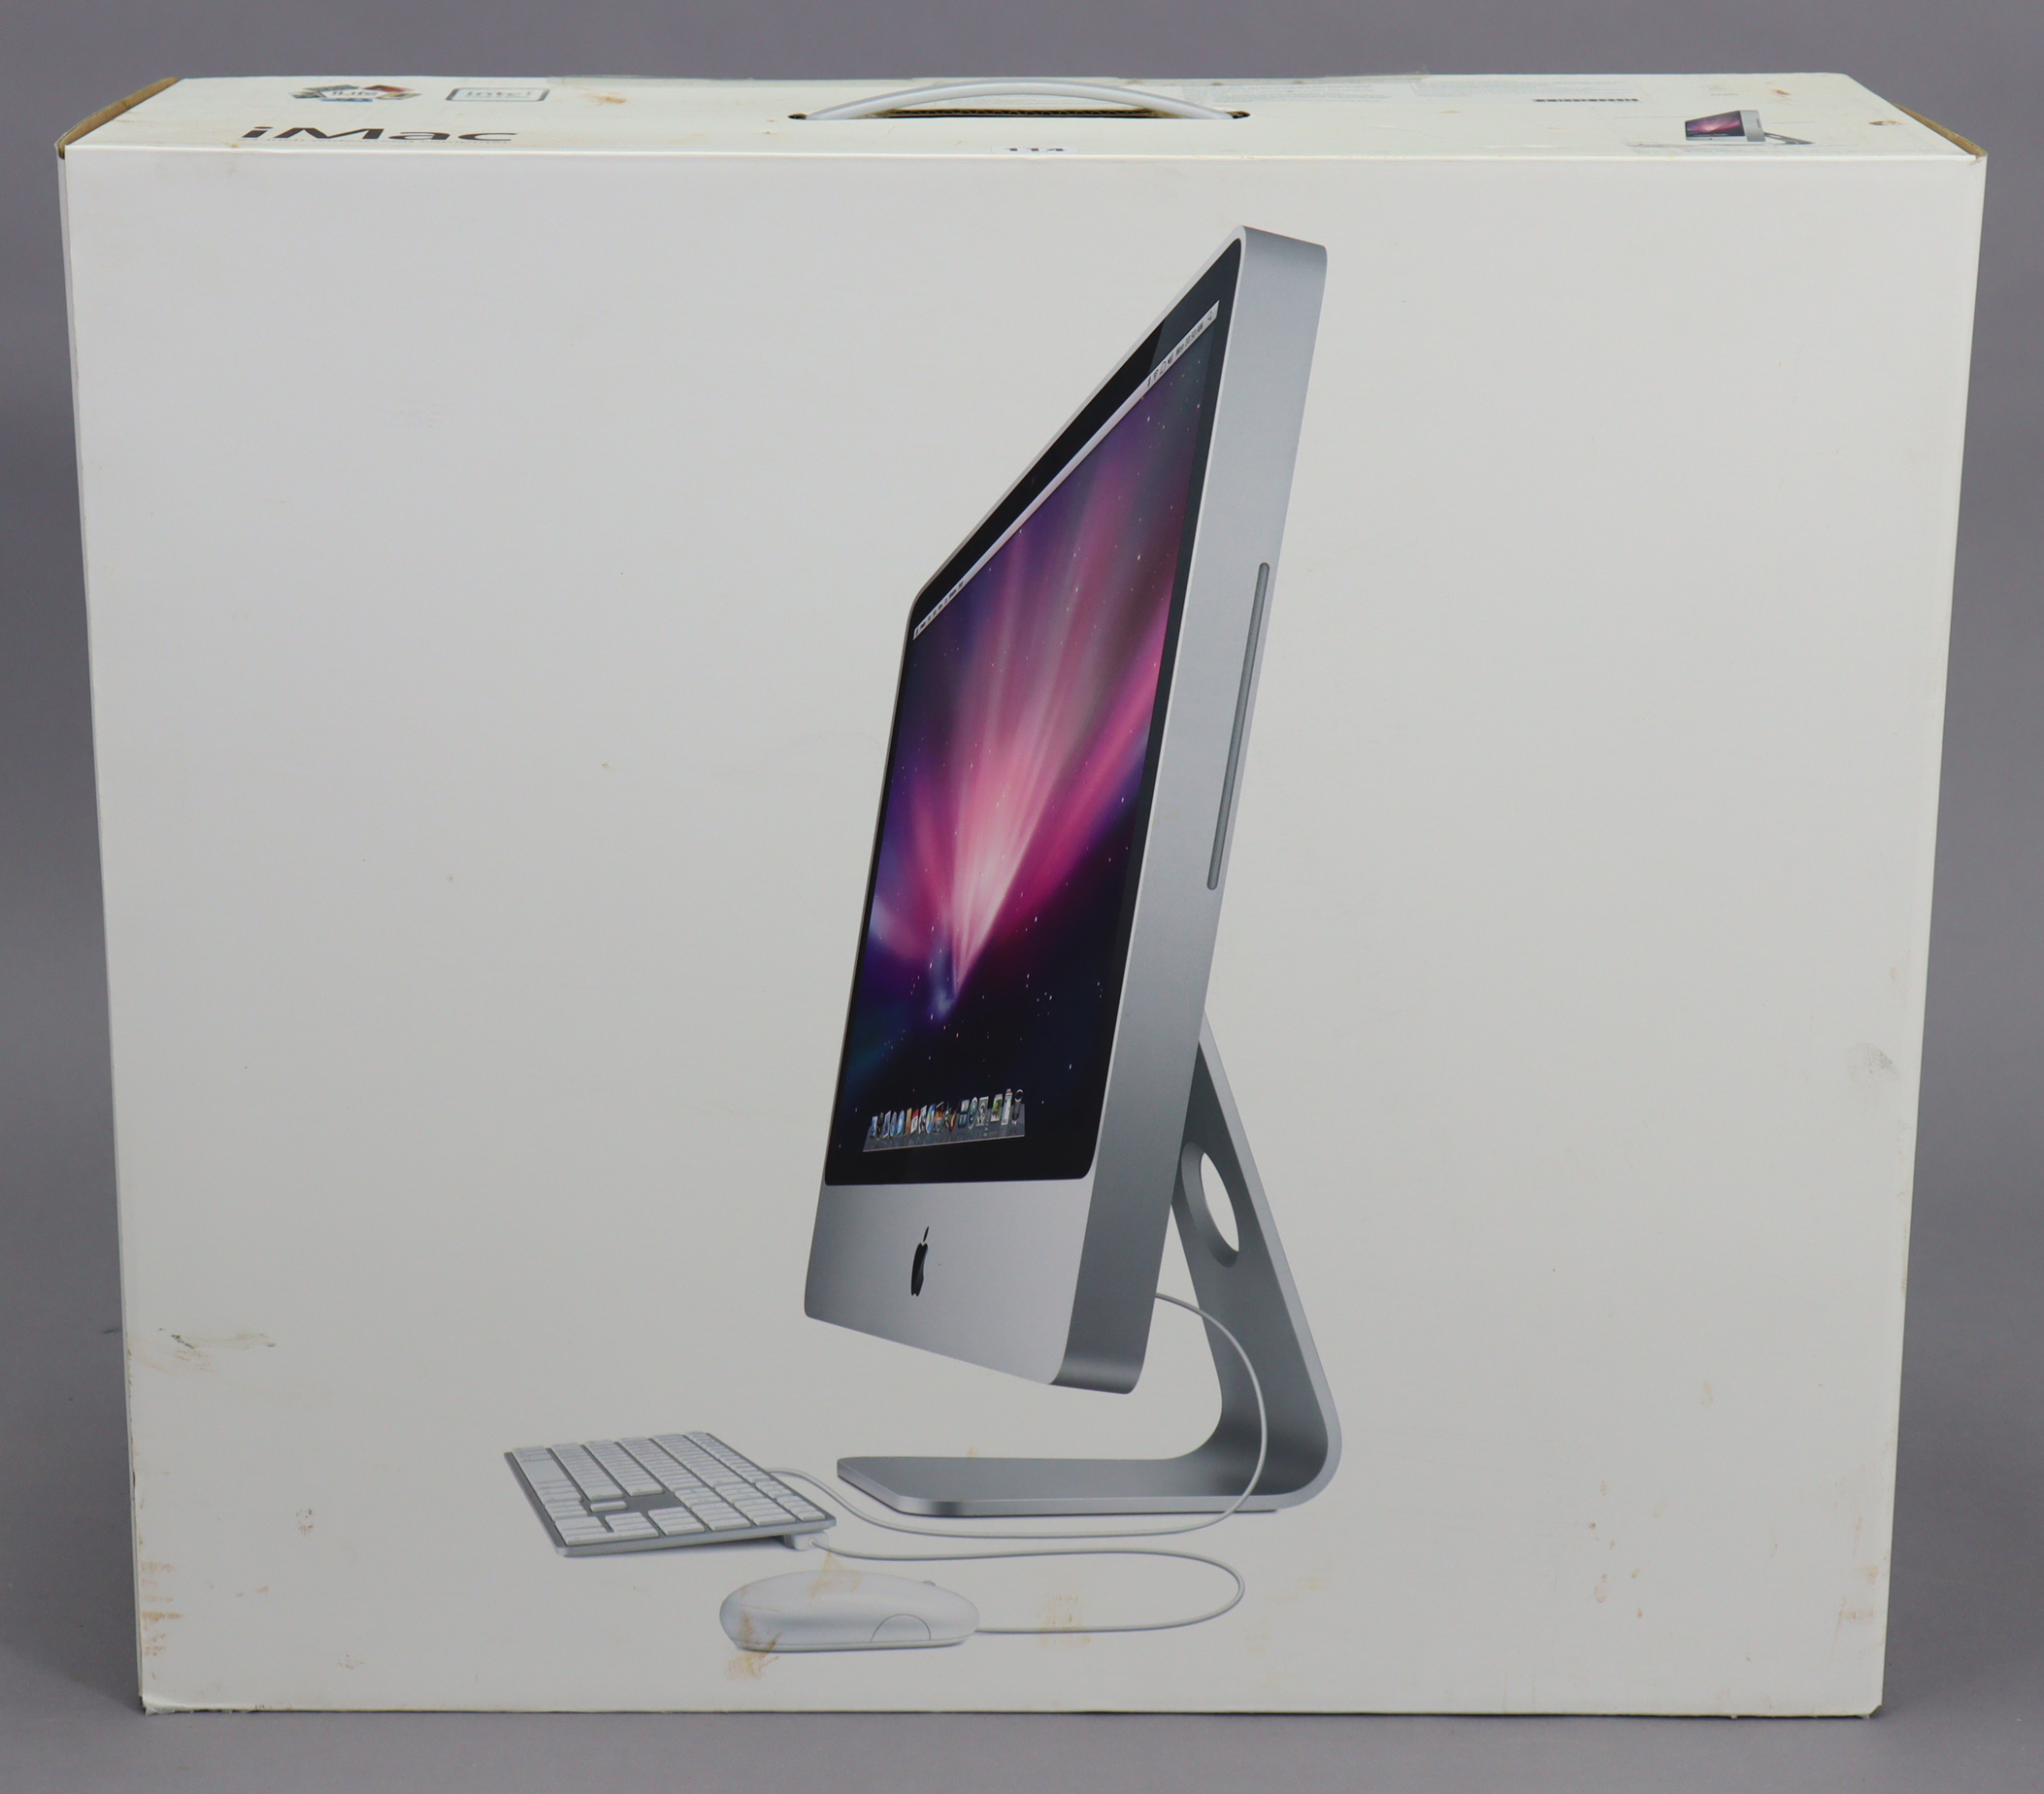 An Apple “Imac” computer, boxed.